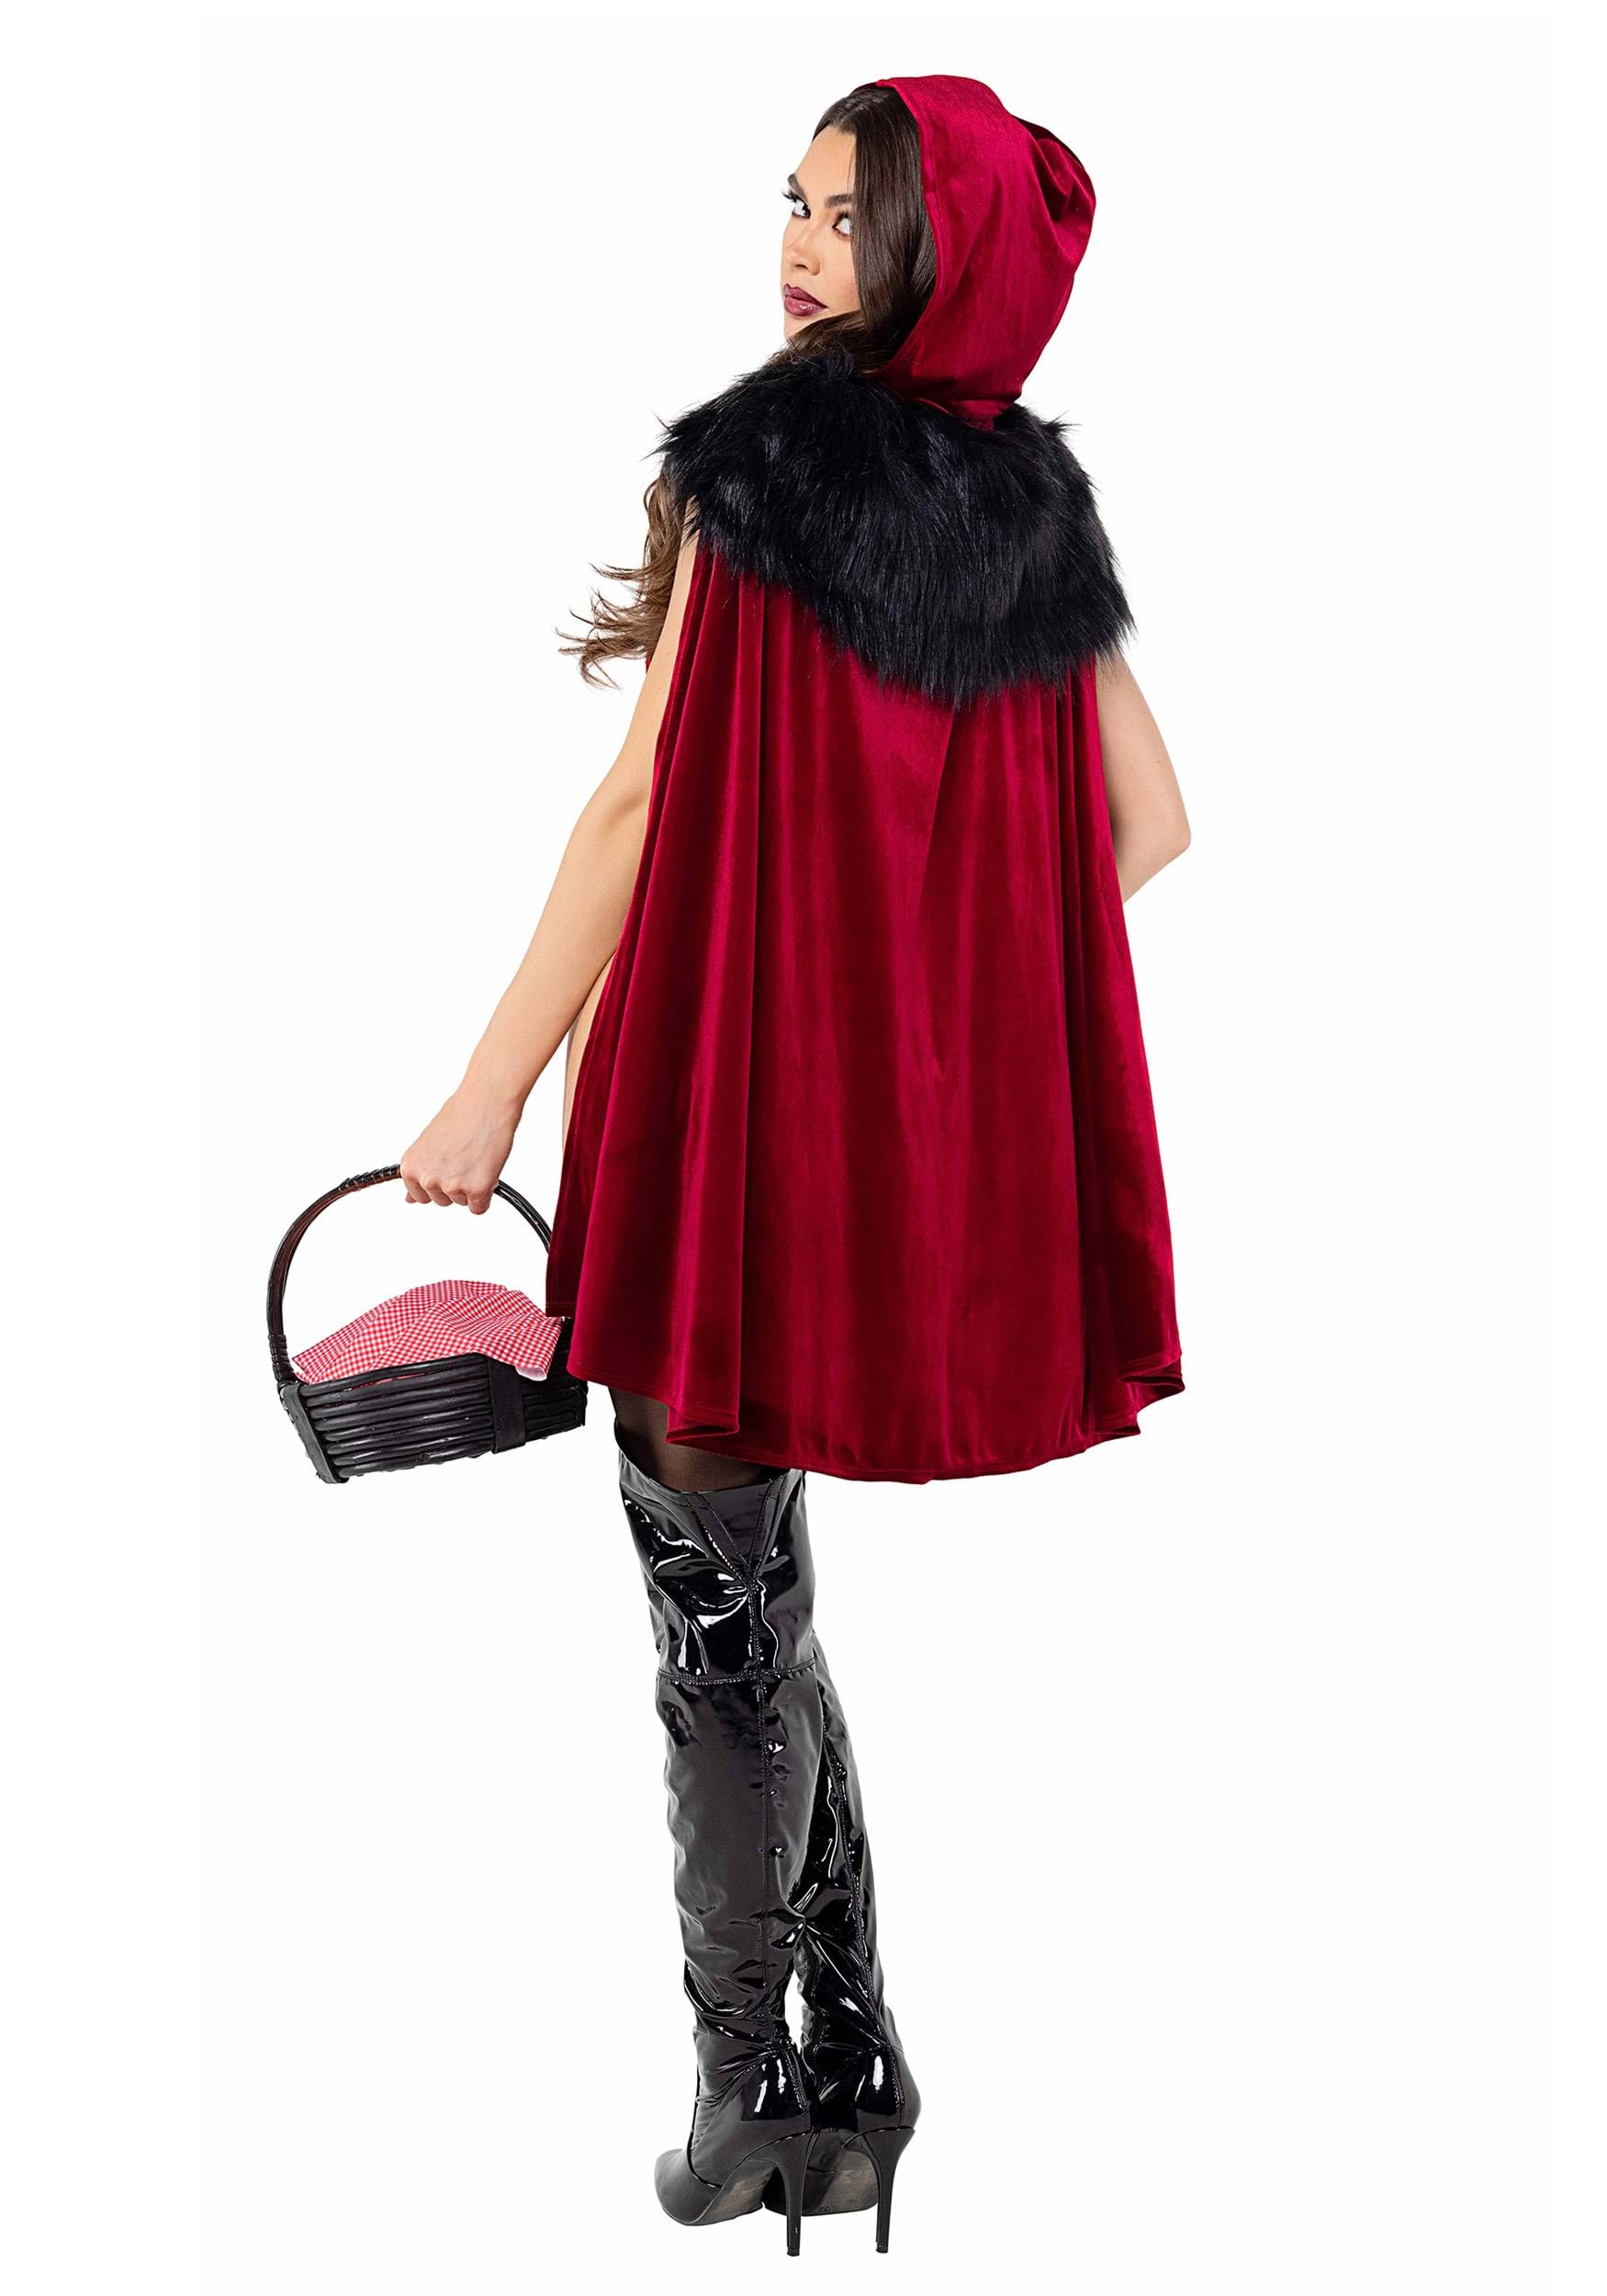 Women's Playboy Bunny Red Riding Hood Fancy Dress Costume